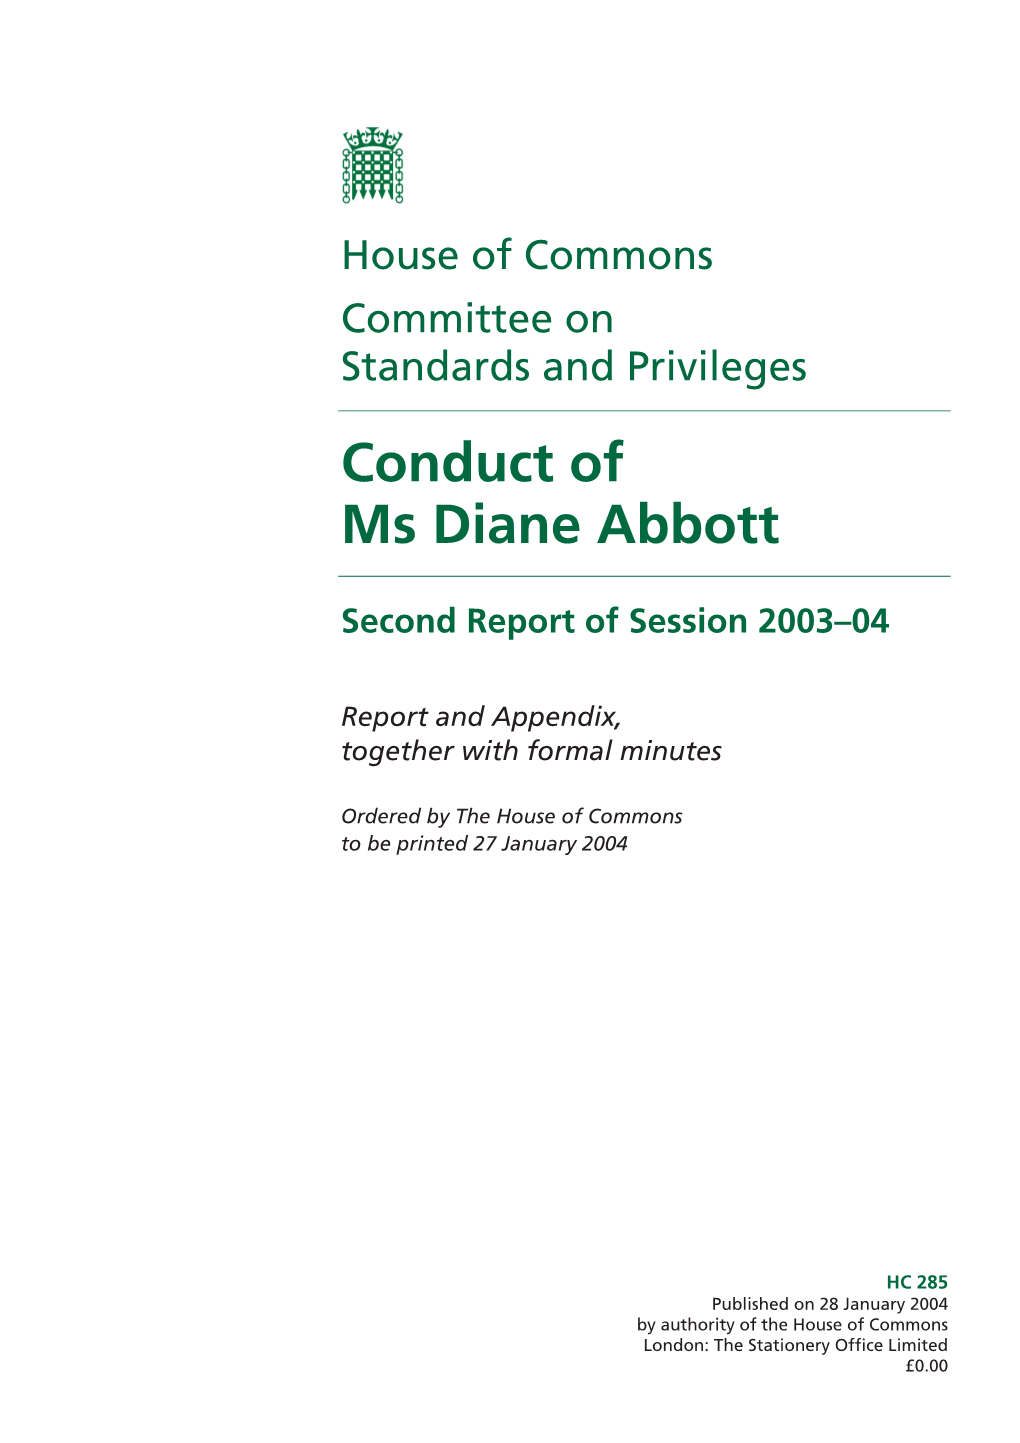 Conduct of Ms Diane Abbott